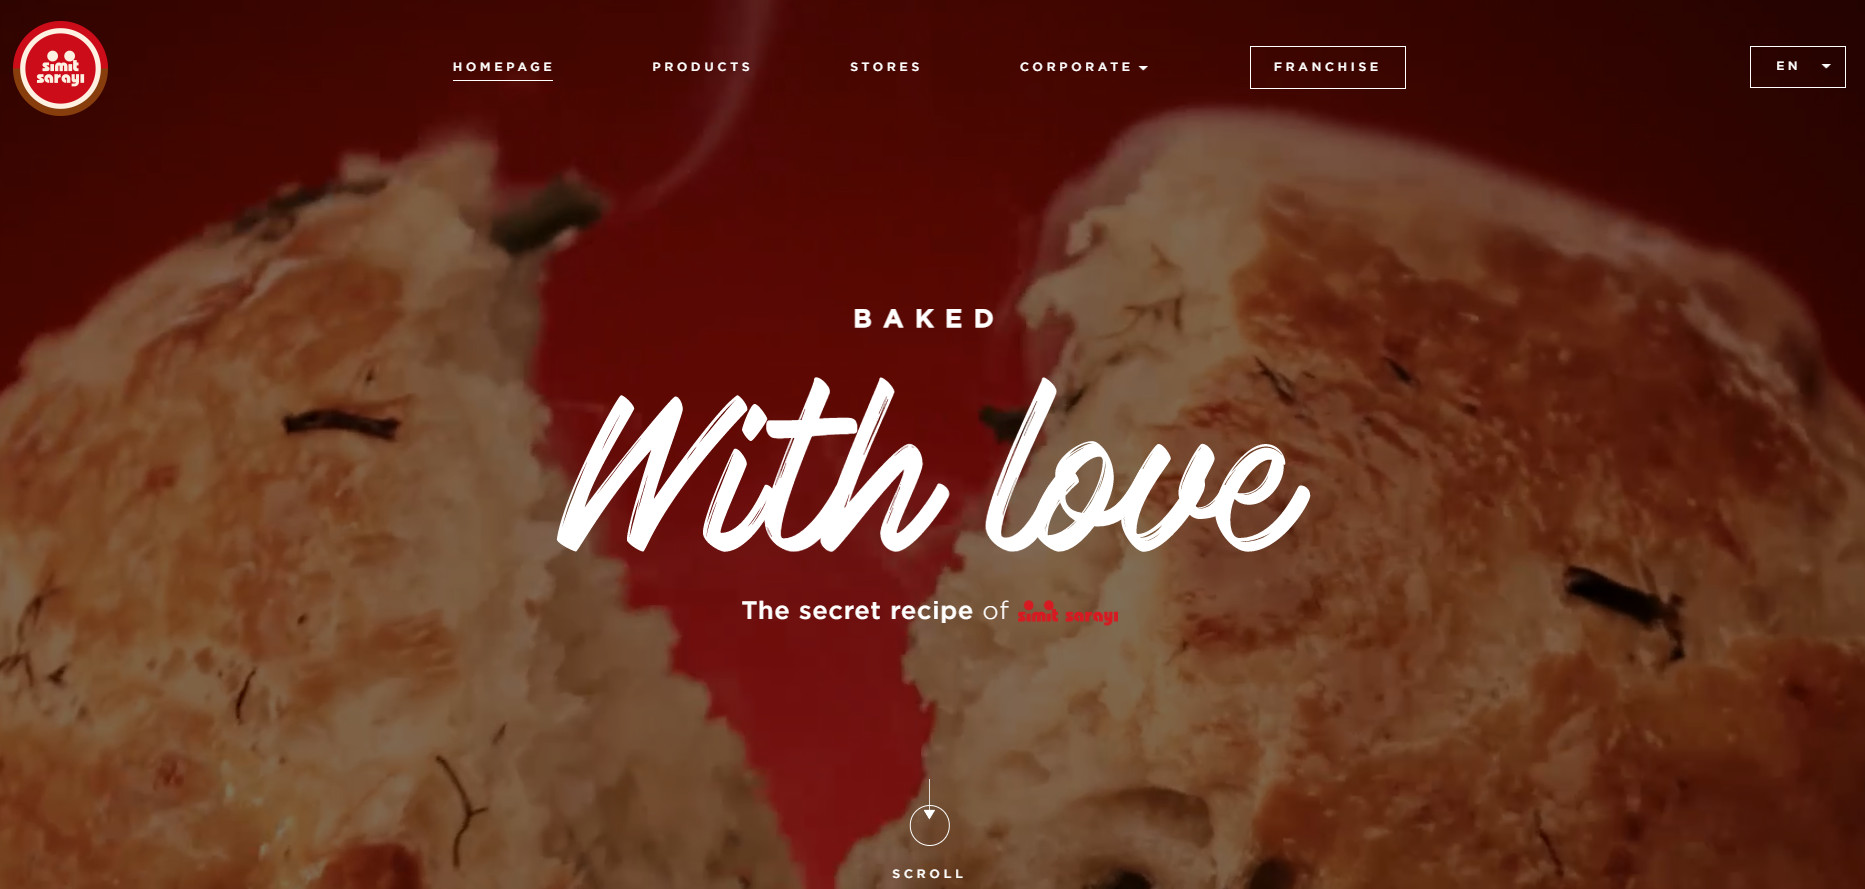  bakery website template example Simit Sarayi